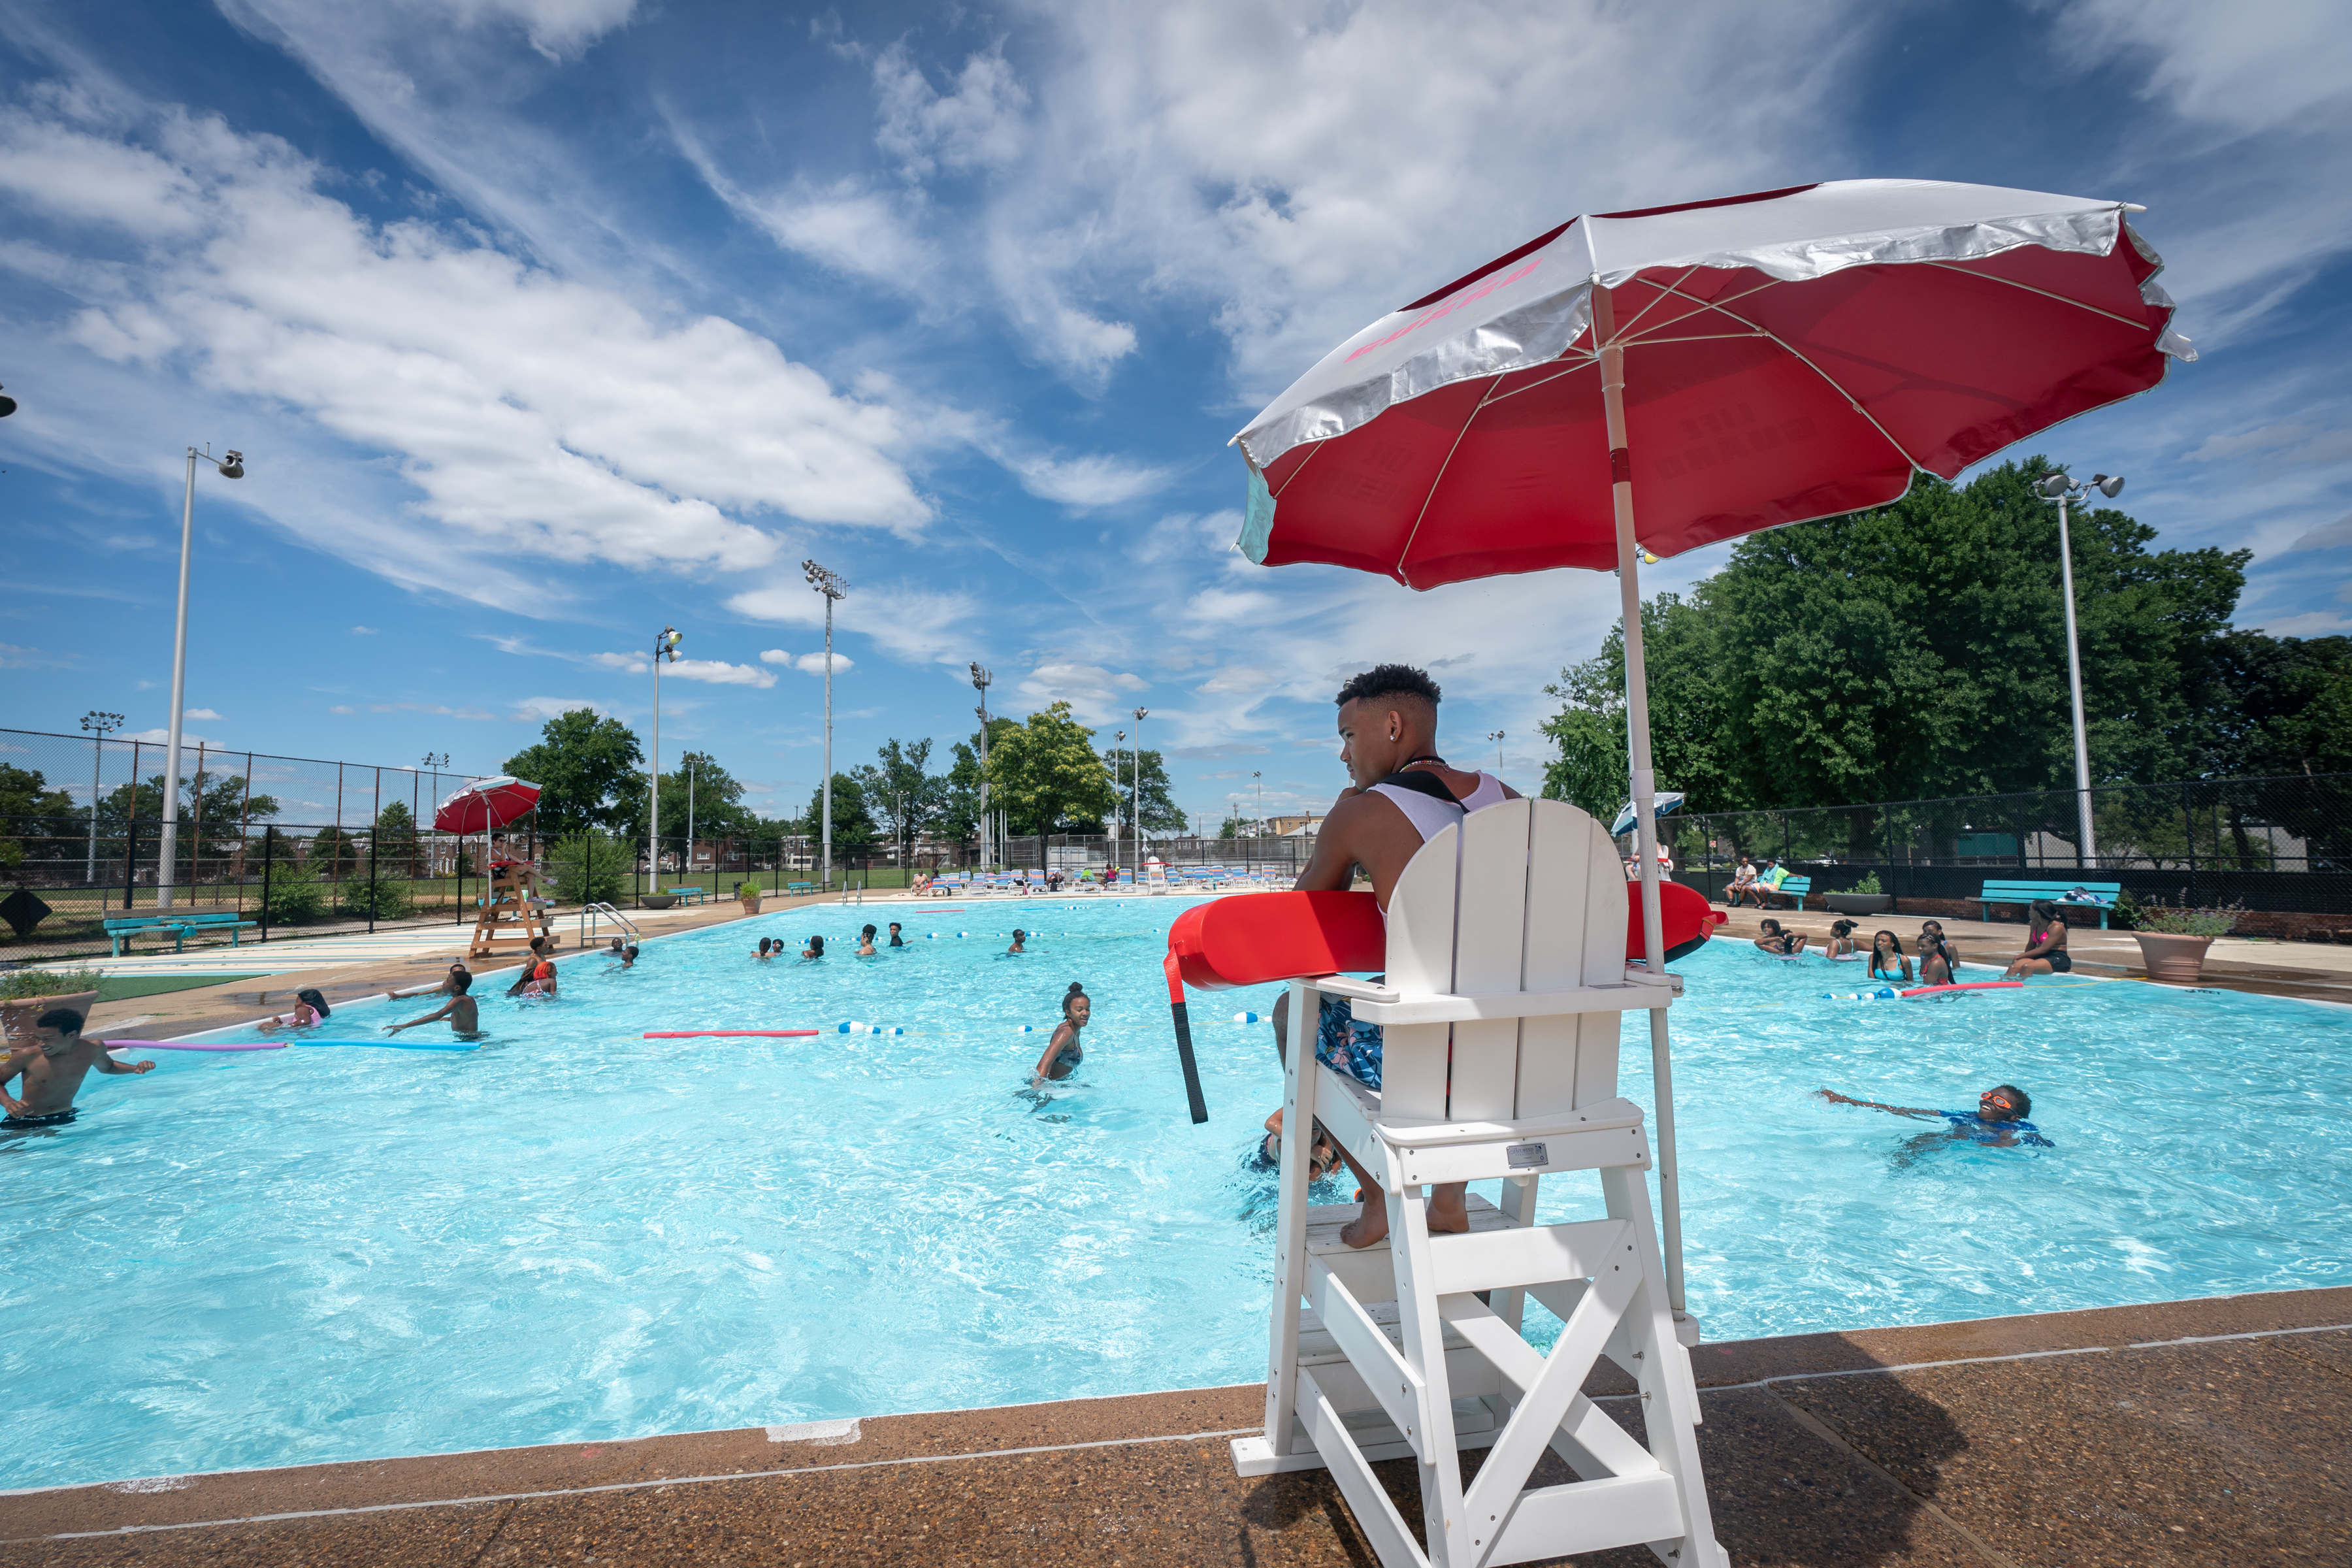 Chronic lifeguard shortage serves as springboard to address racial